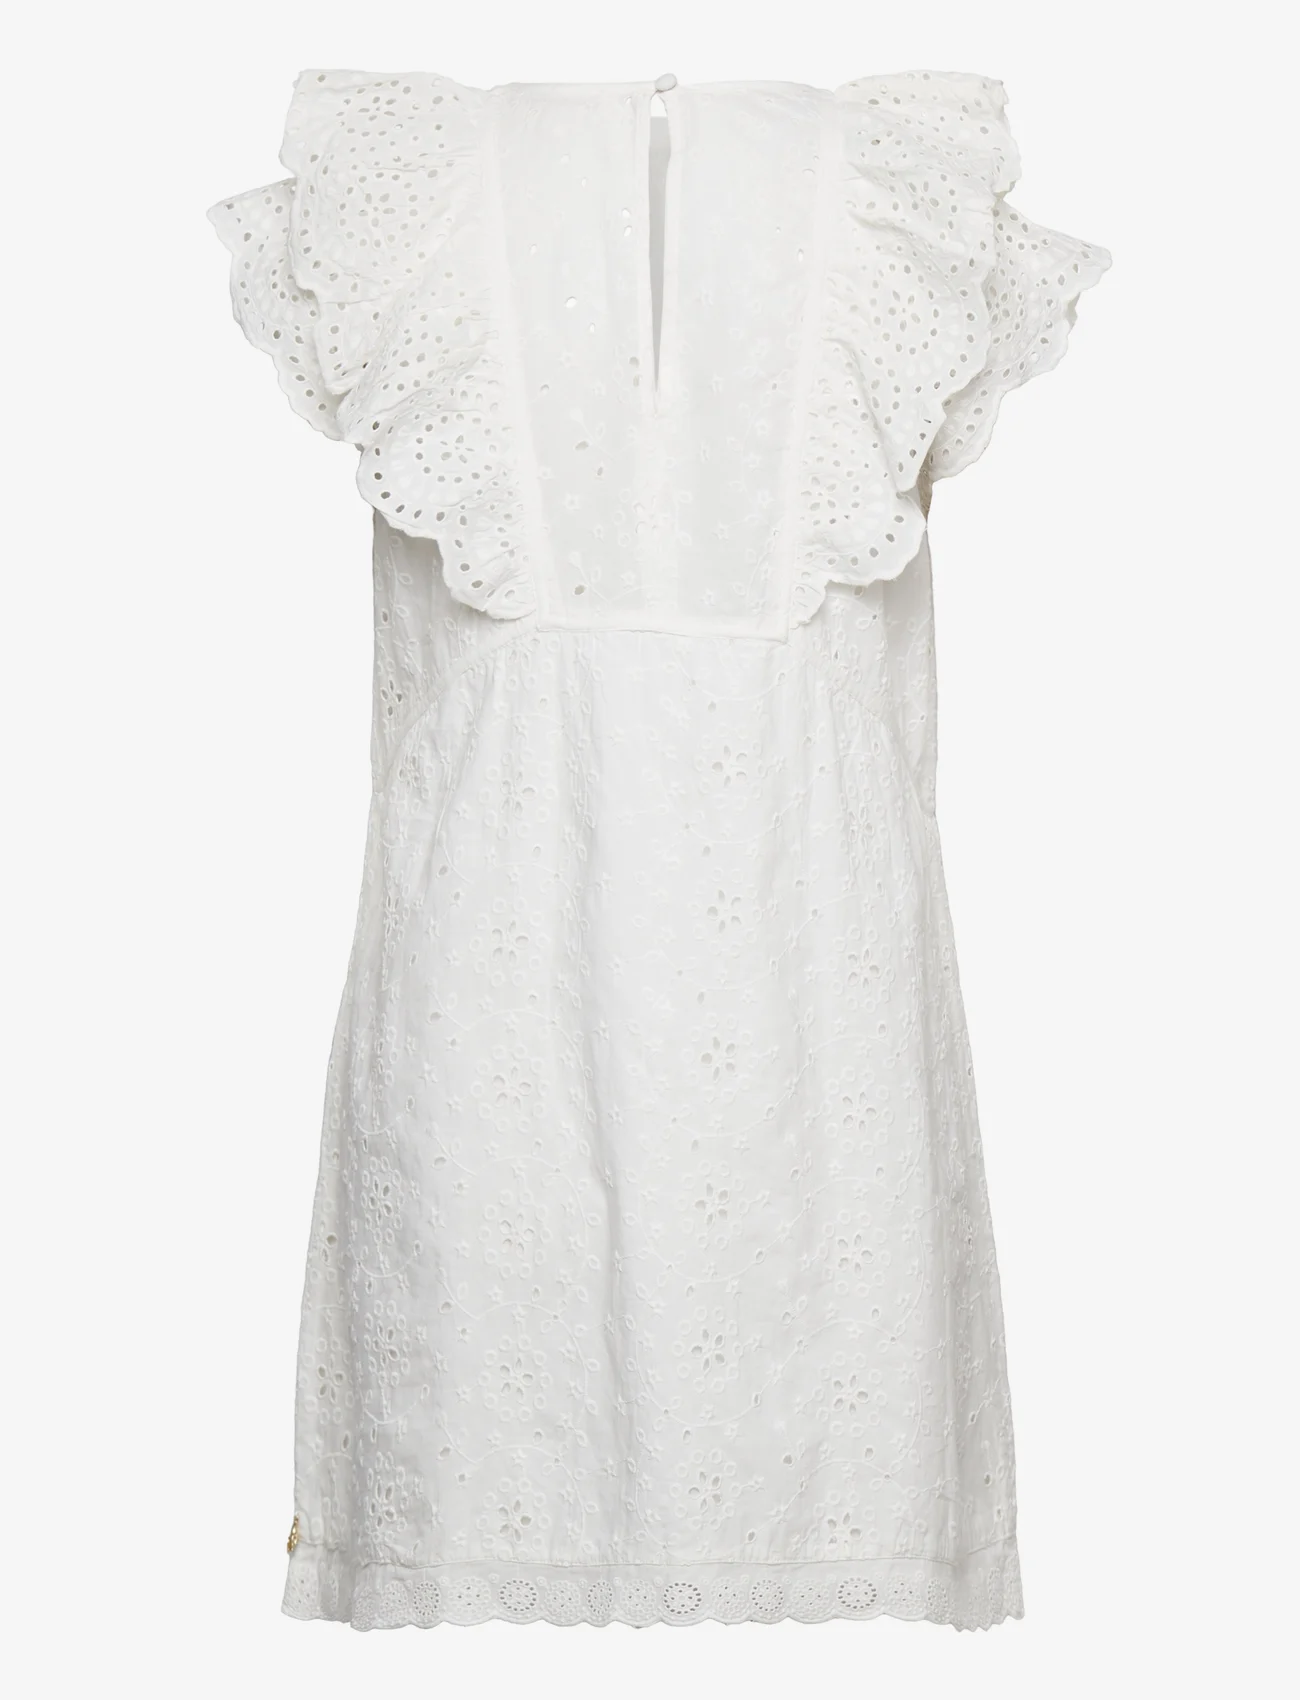 Fabienne Chapot - Mimi Dress - summer dresses - cream white - 1